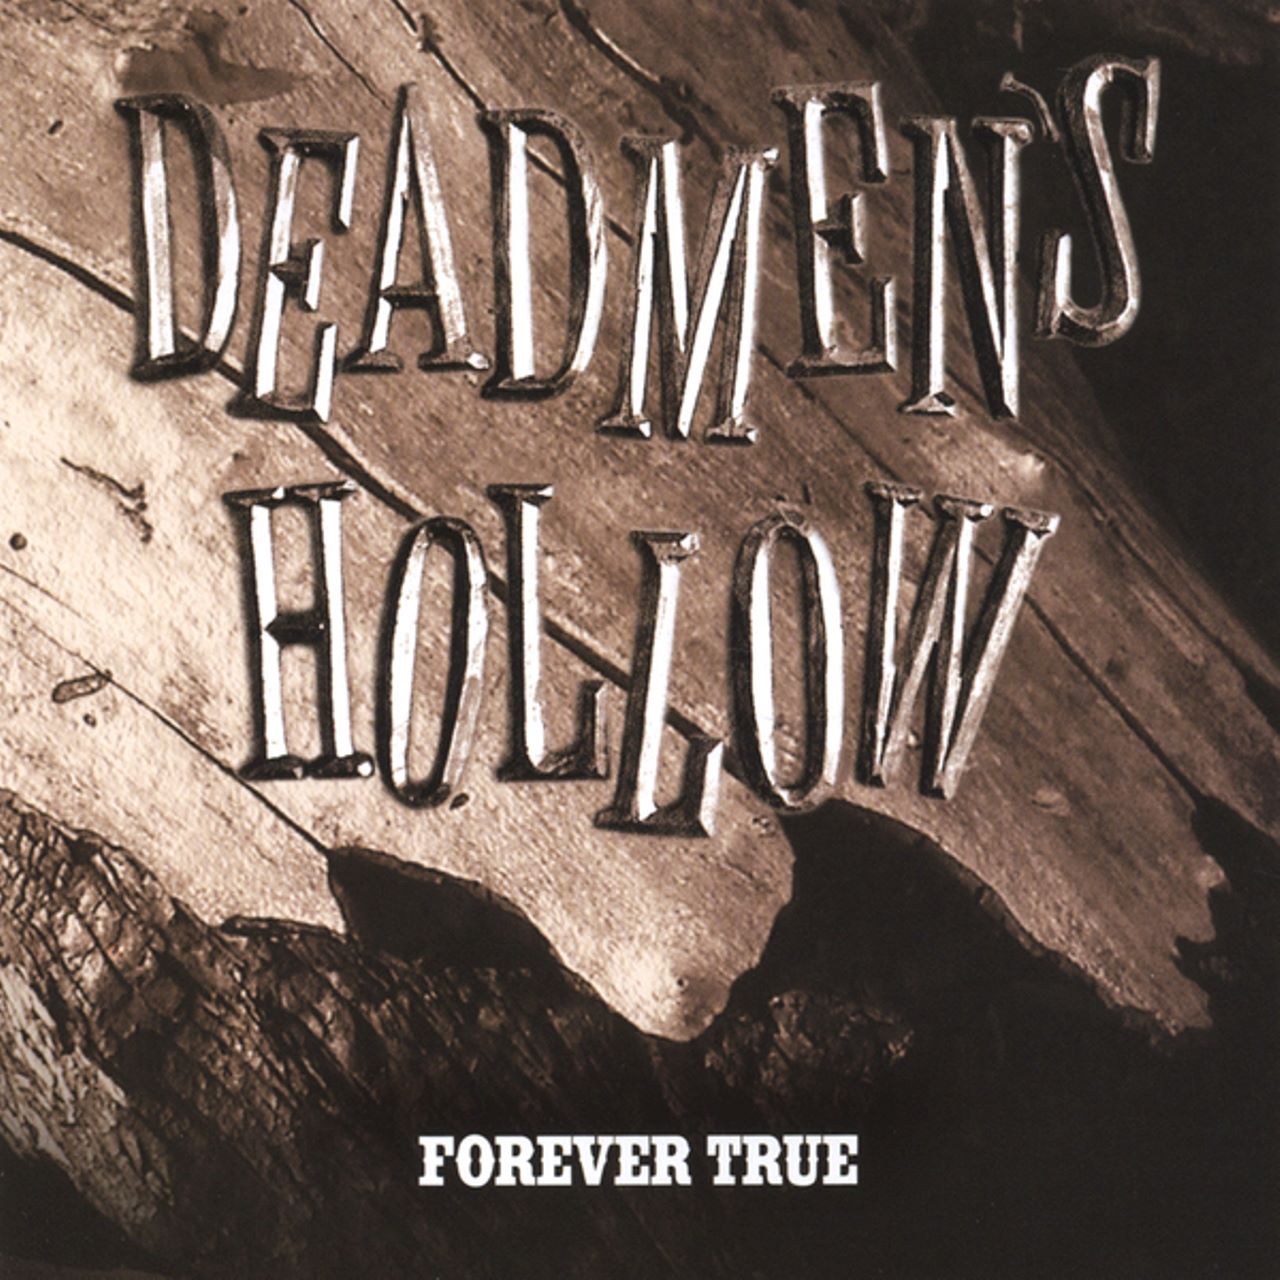 Dead Men’s Hollow - Forever True cover album